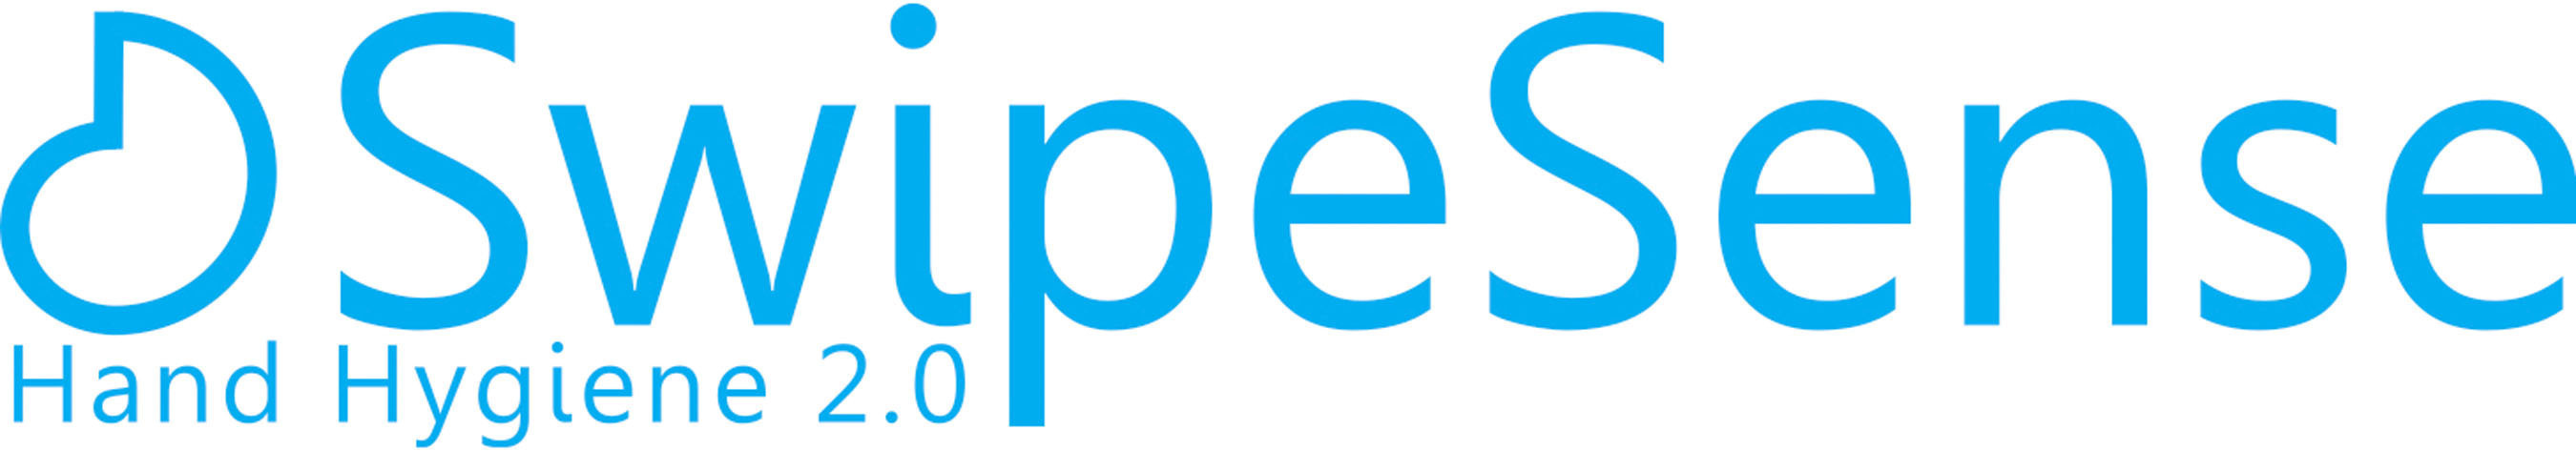 SwipeSense, Inc. logo. (PRNewsFoto/SwipeSense) (PRNewsFoto/SWIPESENSE)